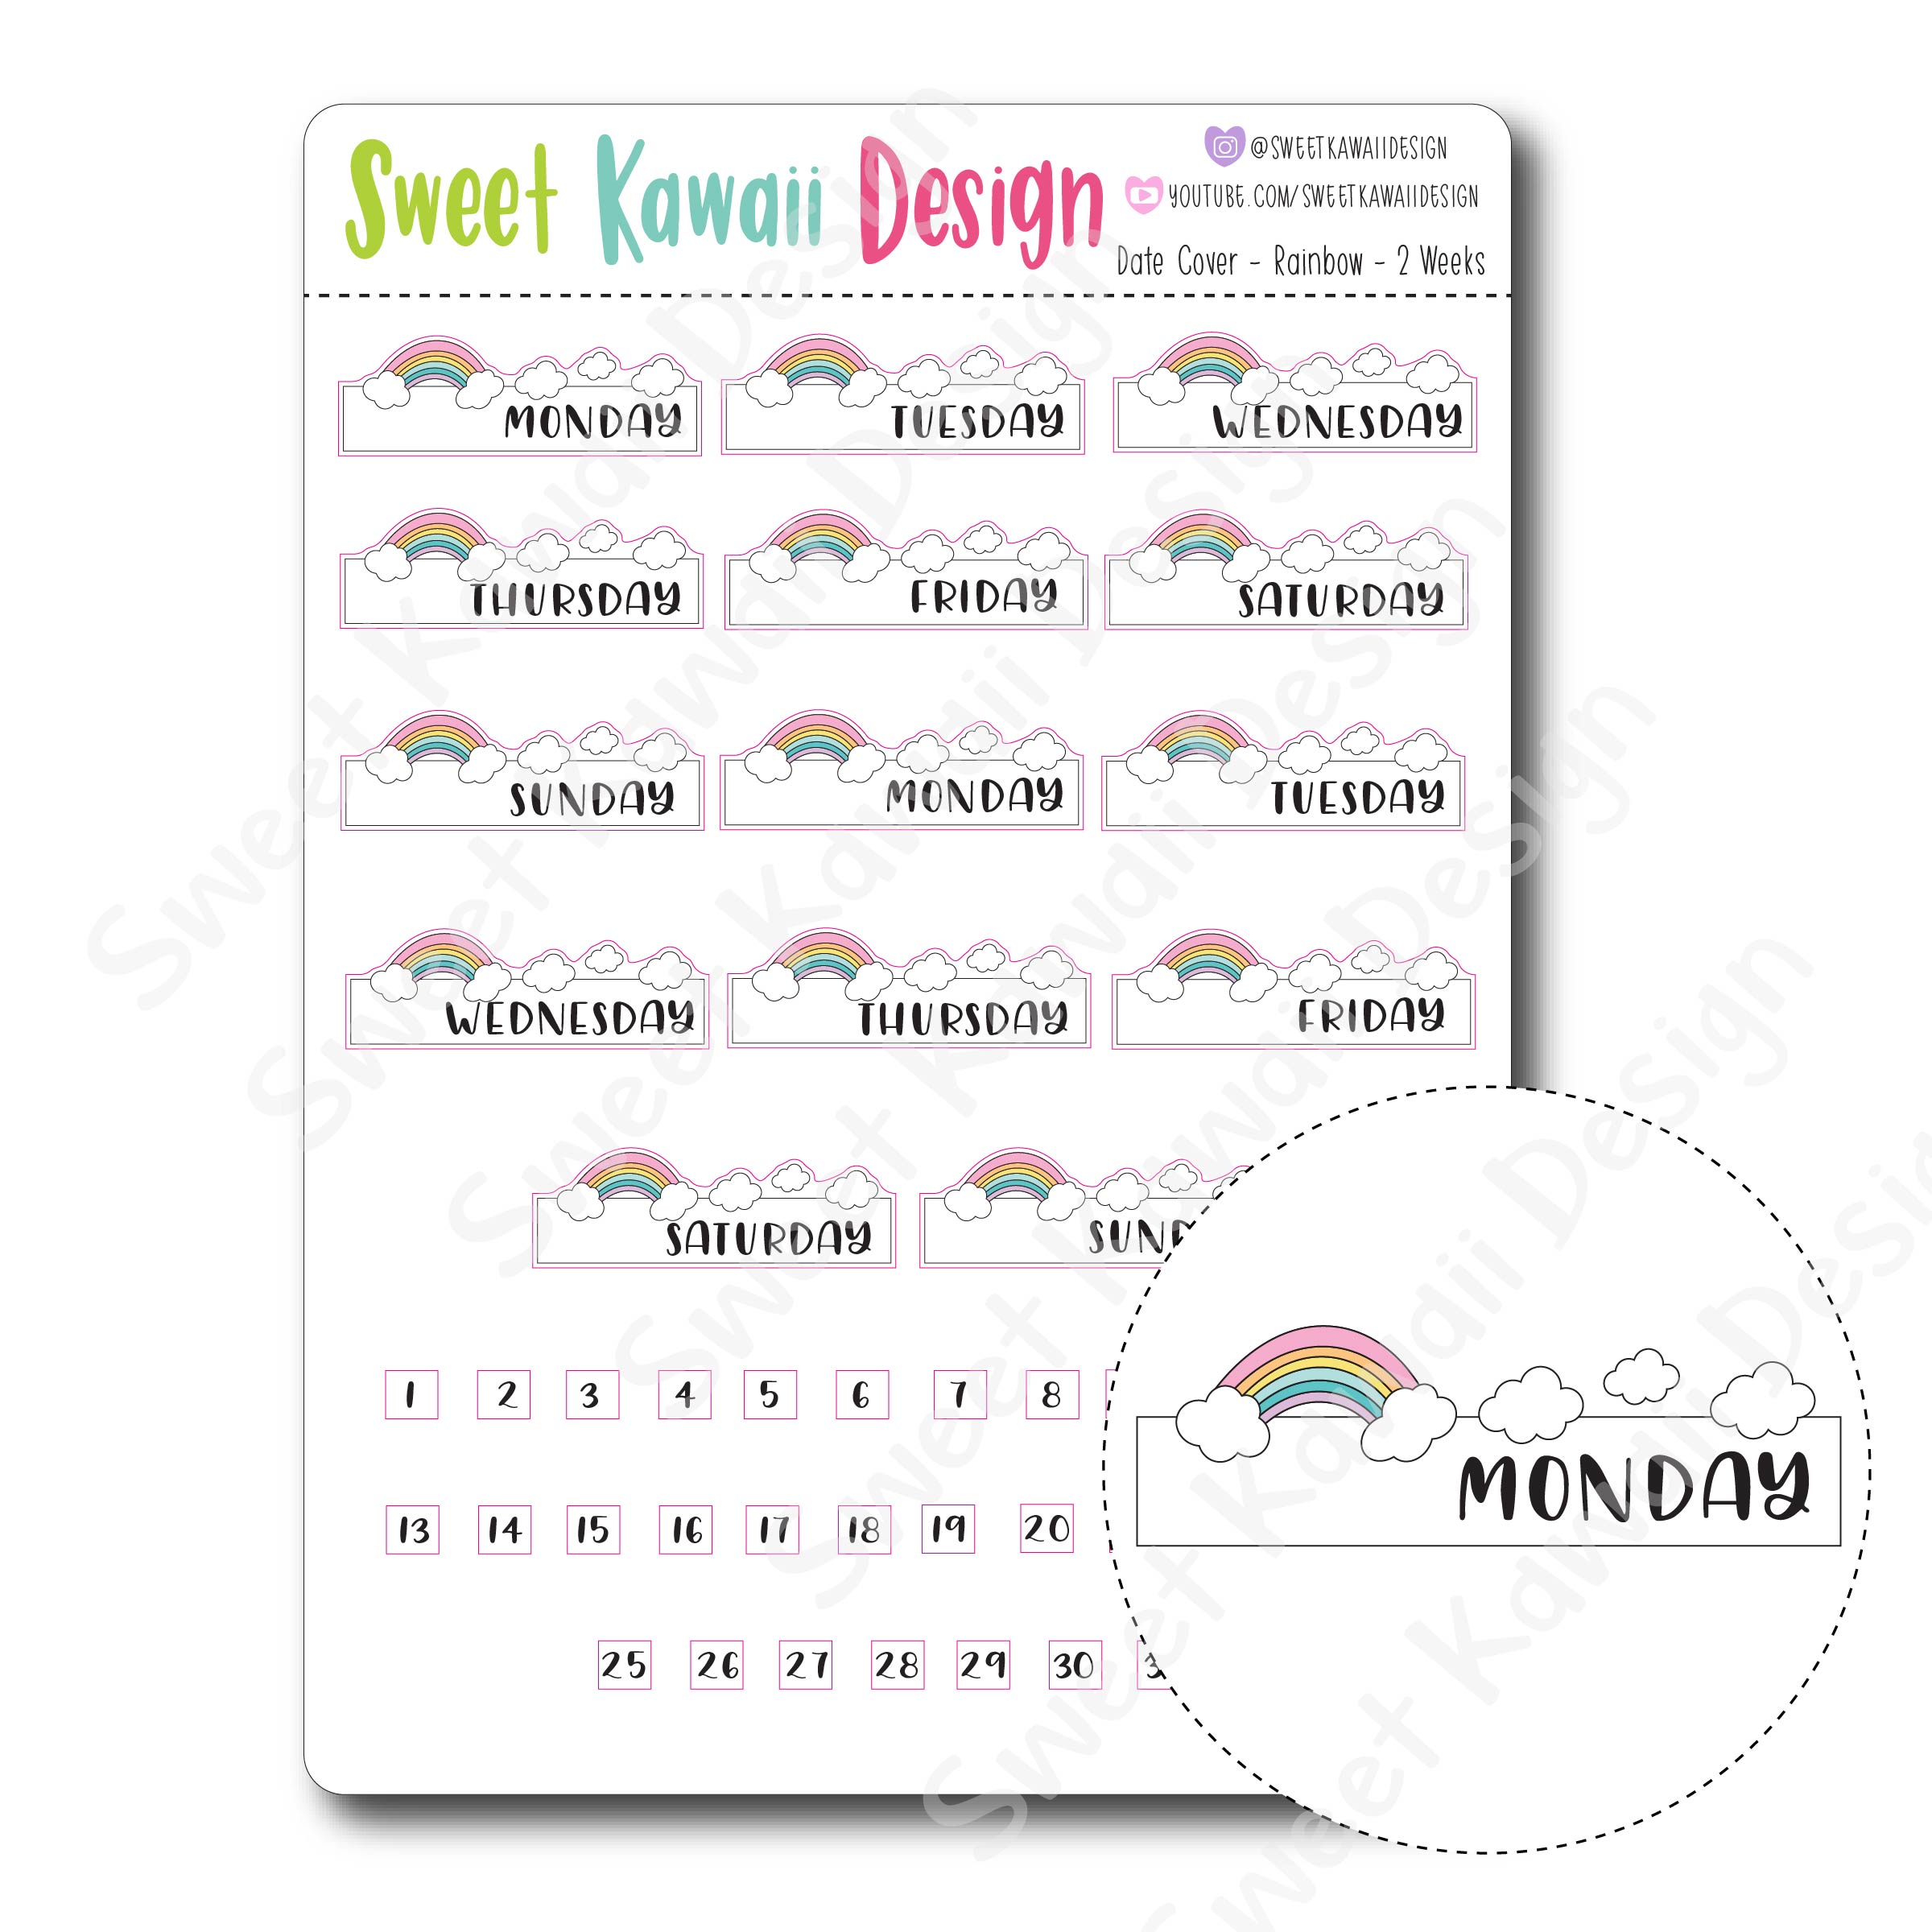 Kawaii Date Cover Stickers - Rainbow